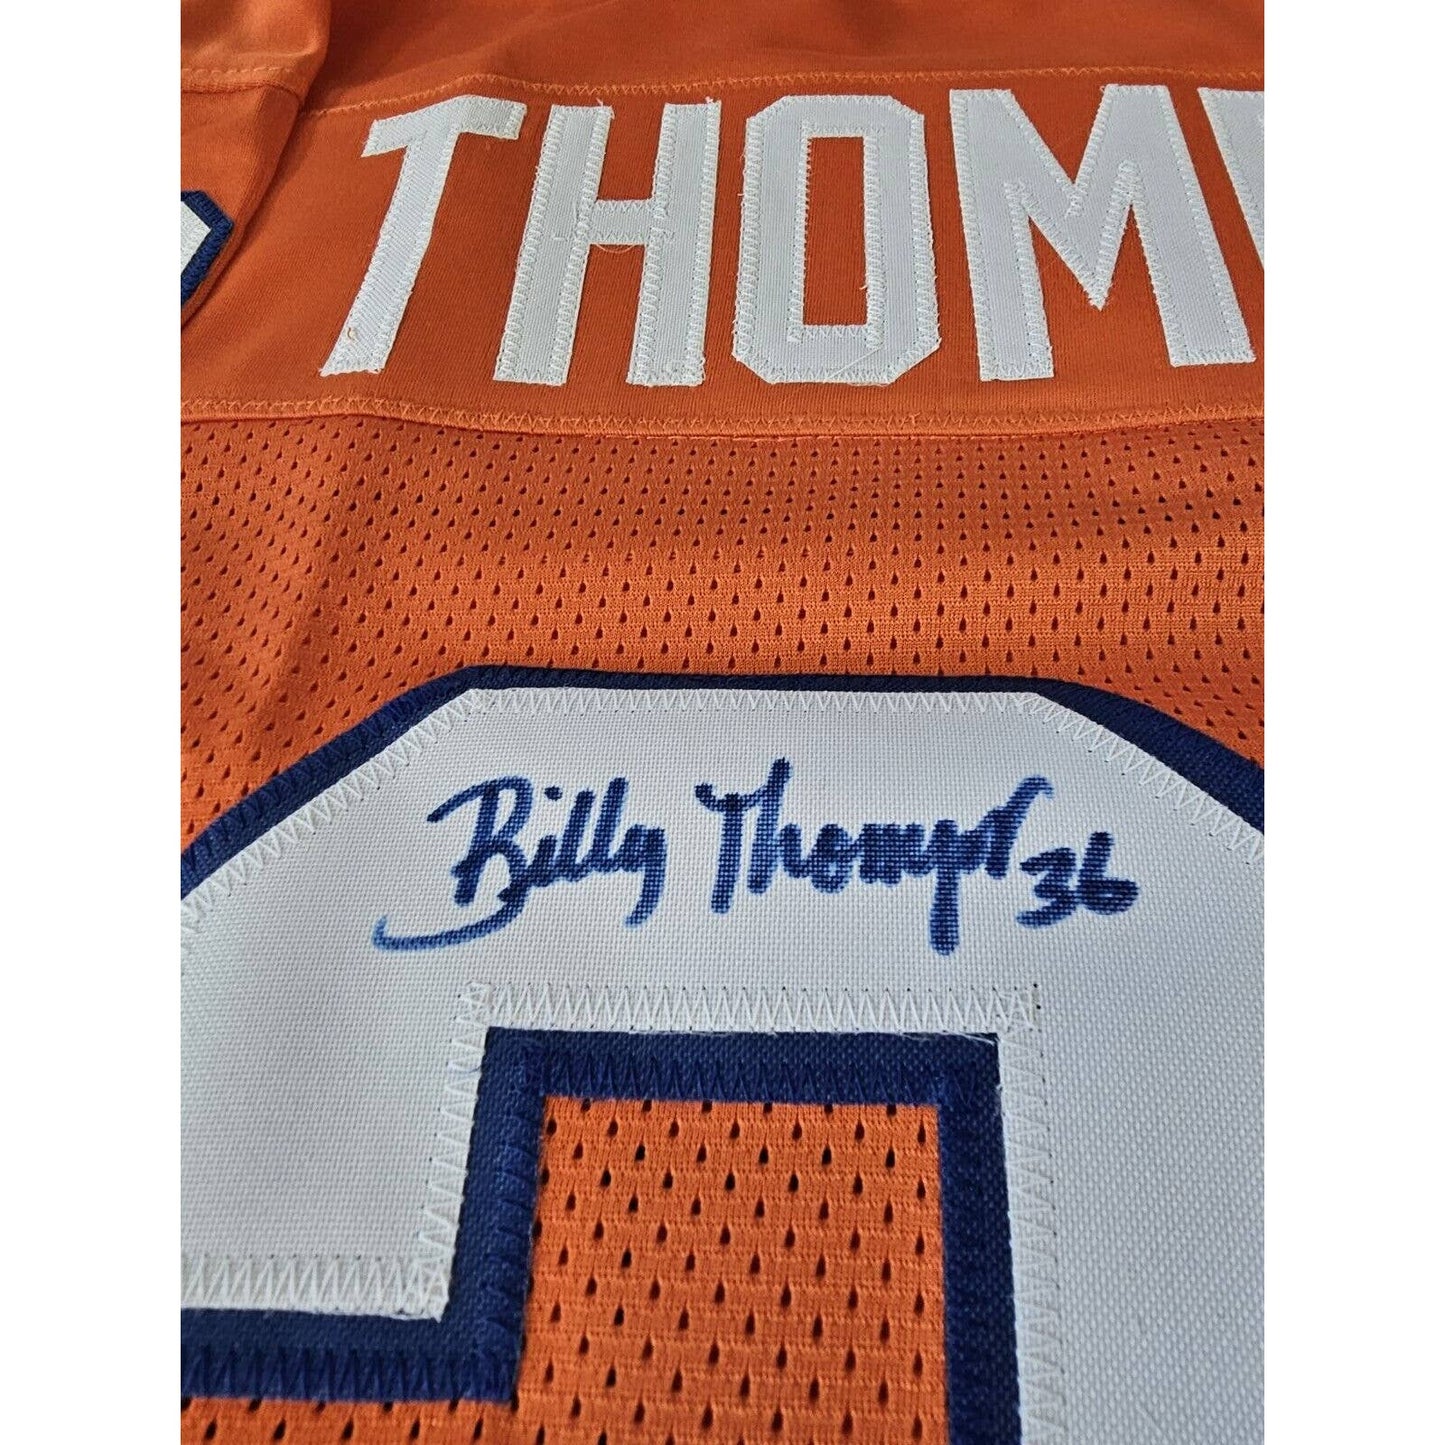 Billy Thompson Autographed/Signed Jersey Beckett Sticker Denver Broncos - TreasuresEvolved